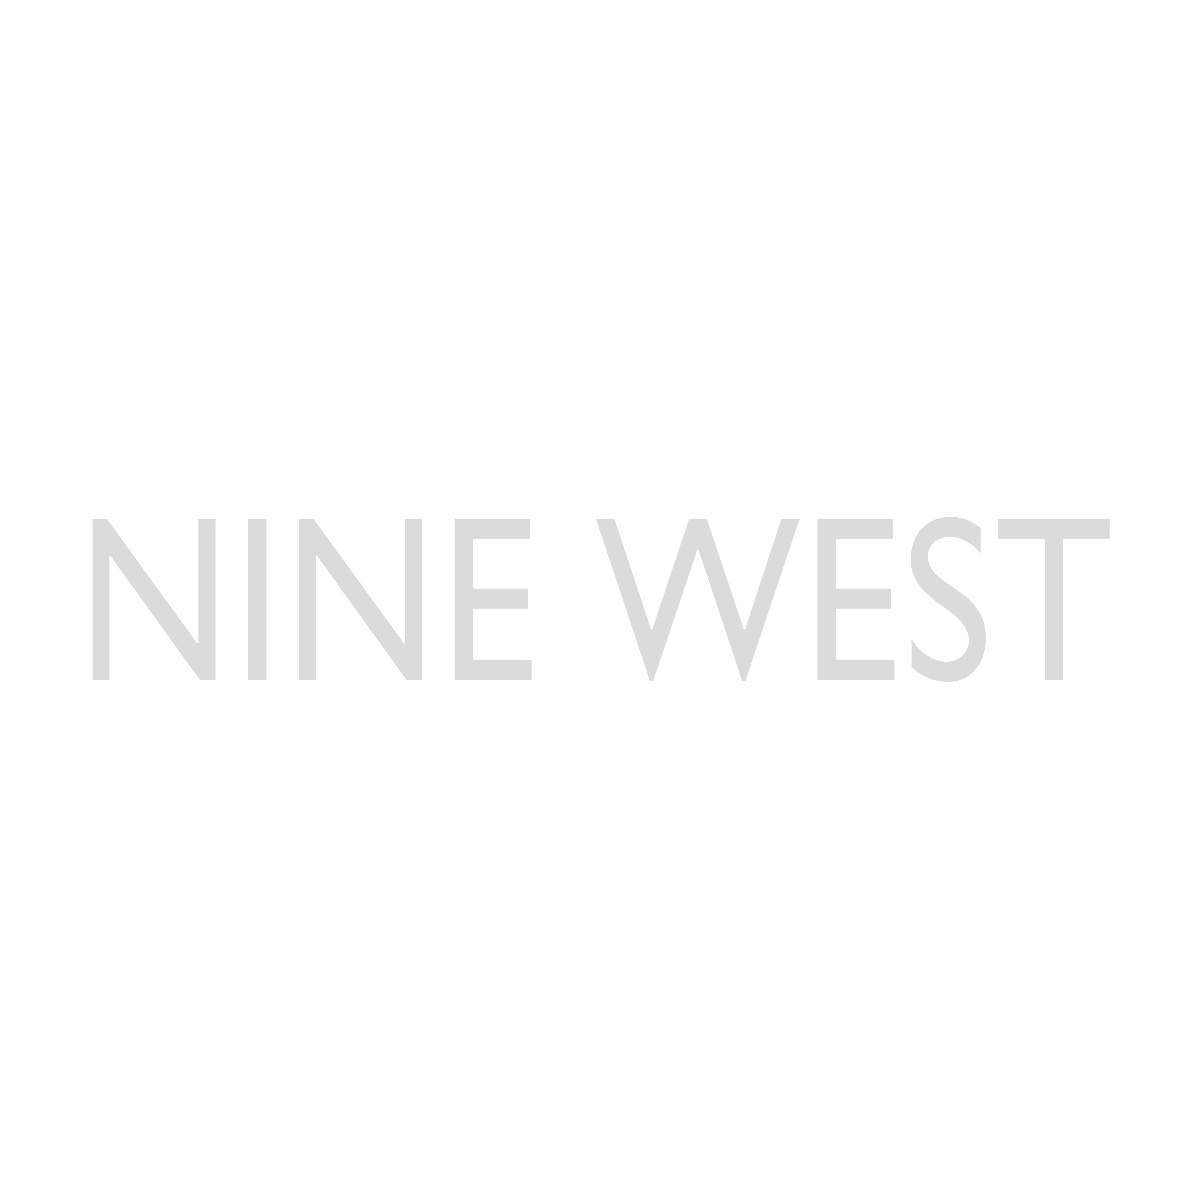 nine west just4you